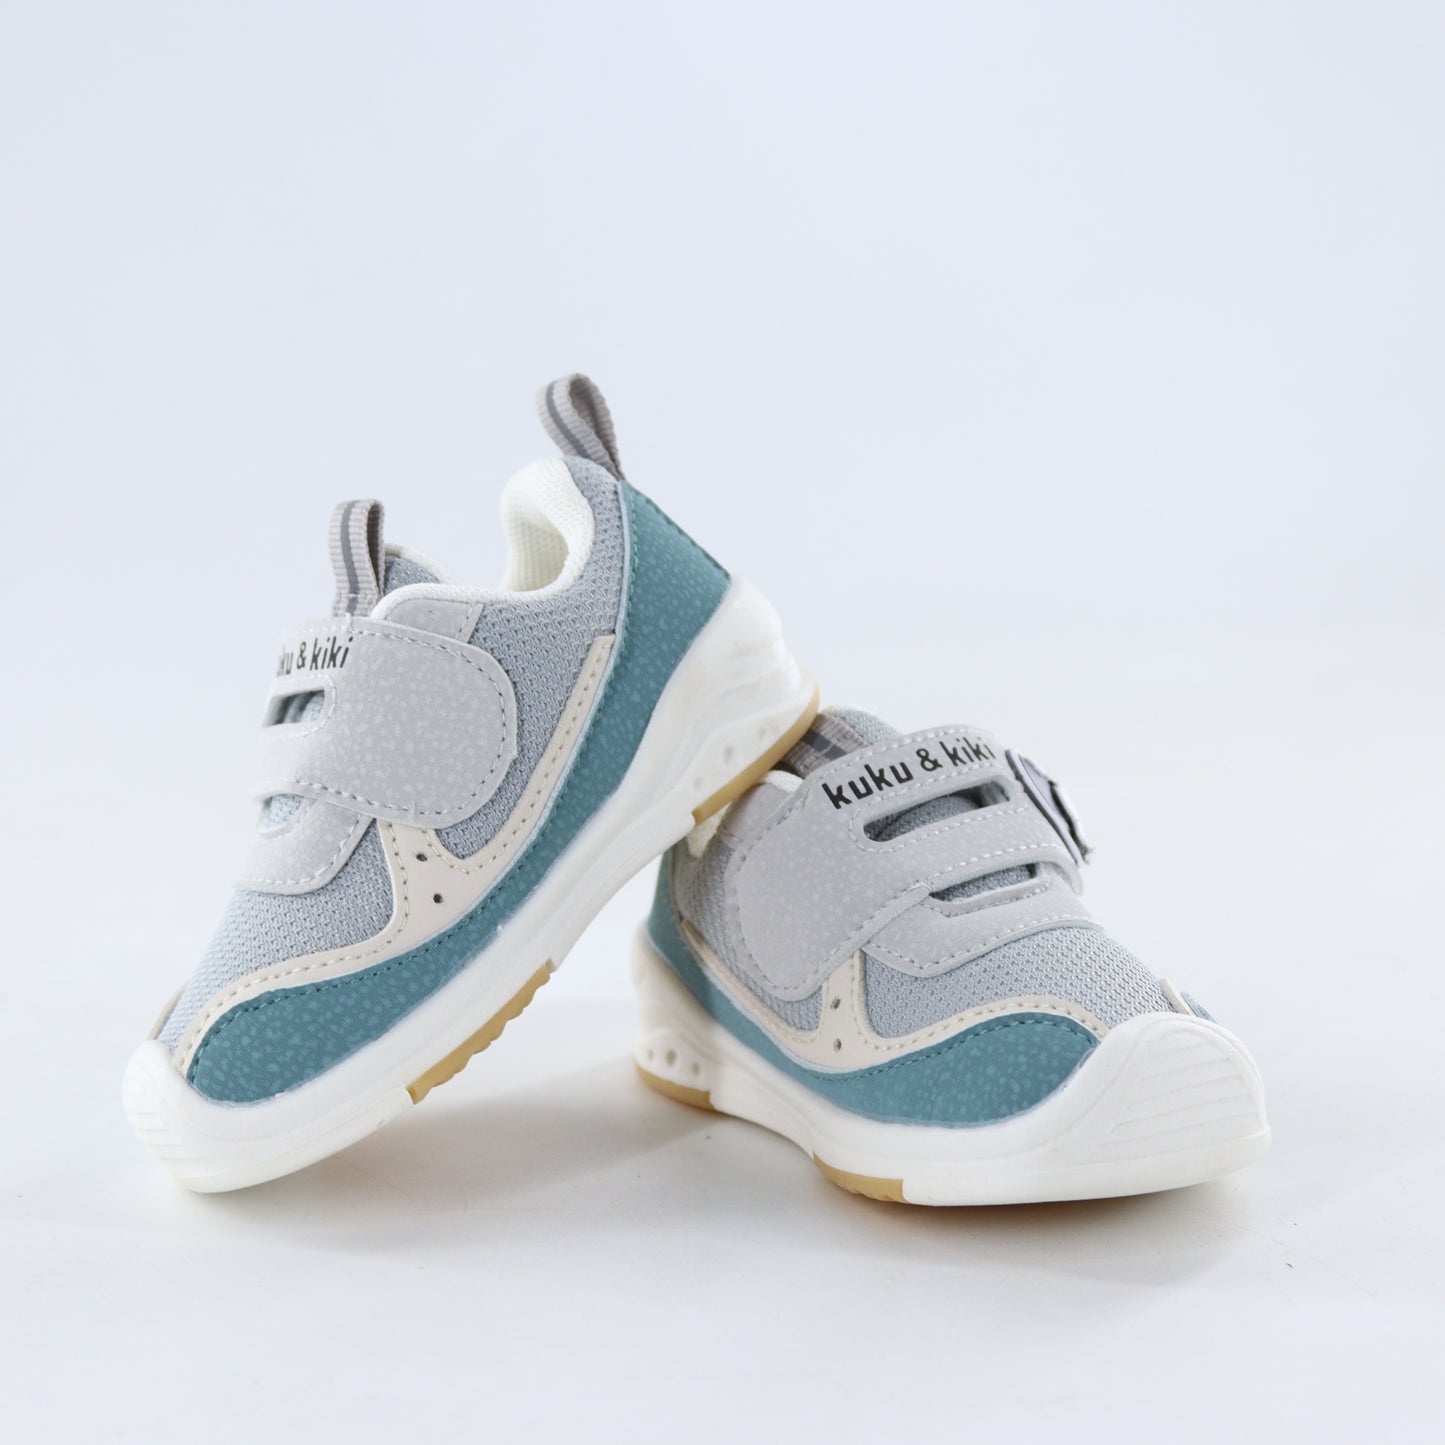 Baby Fashionable Sport Sneakers kuku & kiki